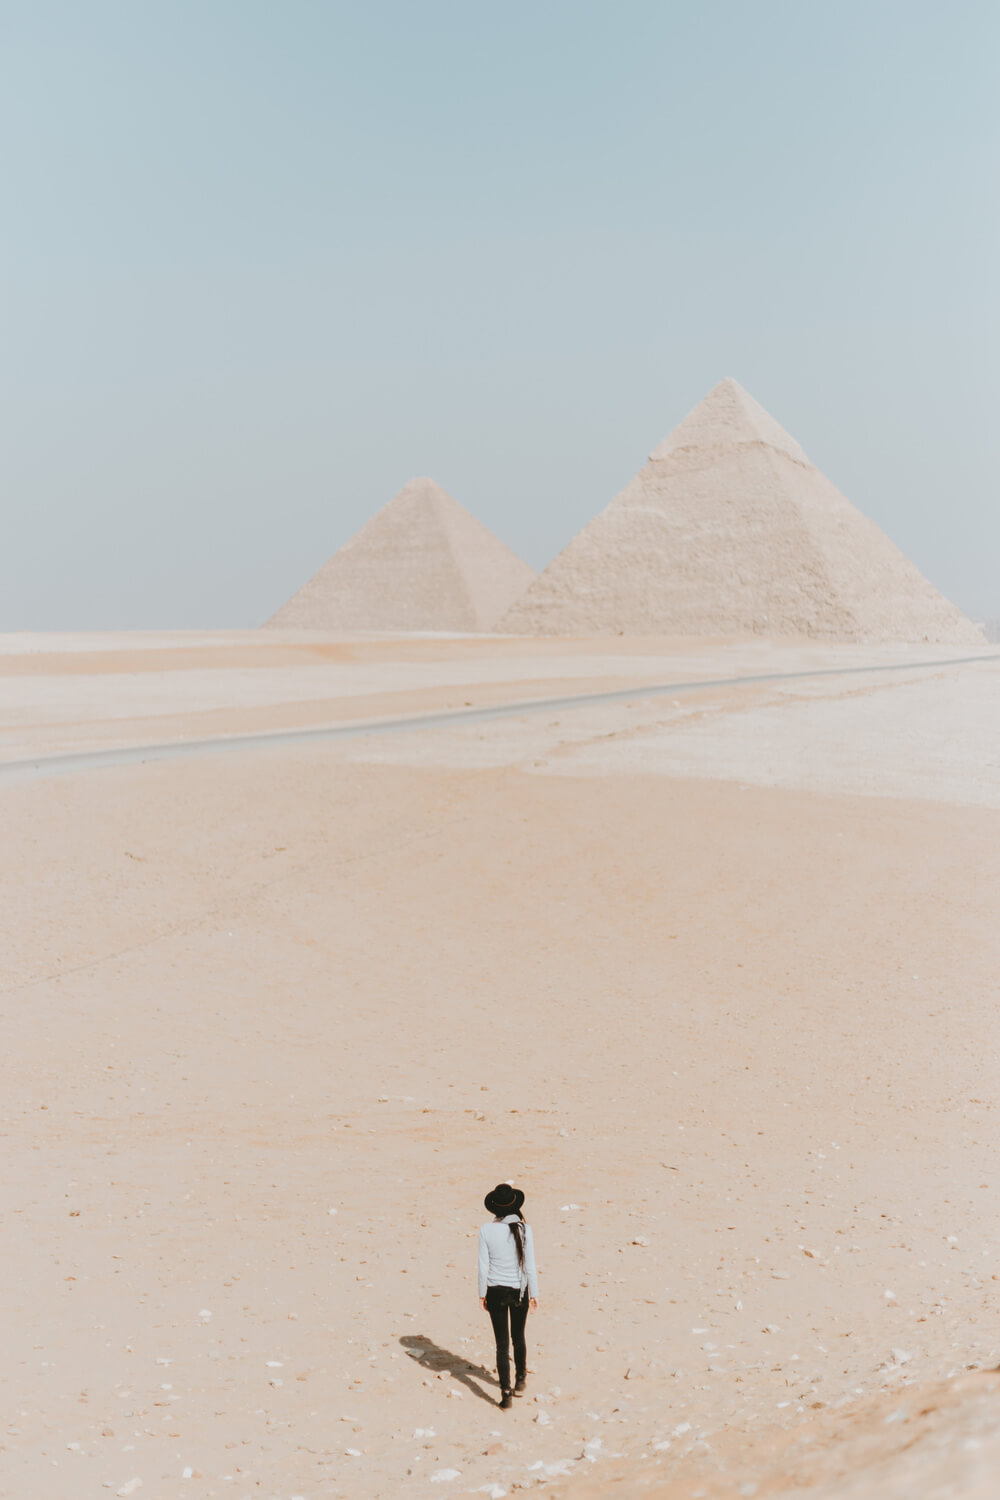 The Giza Pyramid Complex. Image by Jona Grey